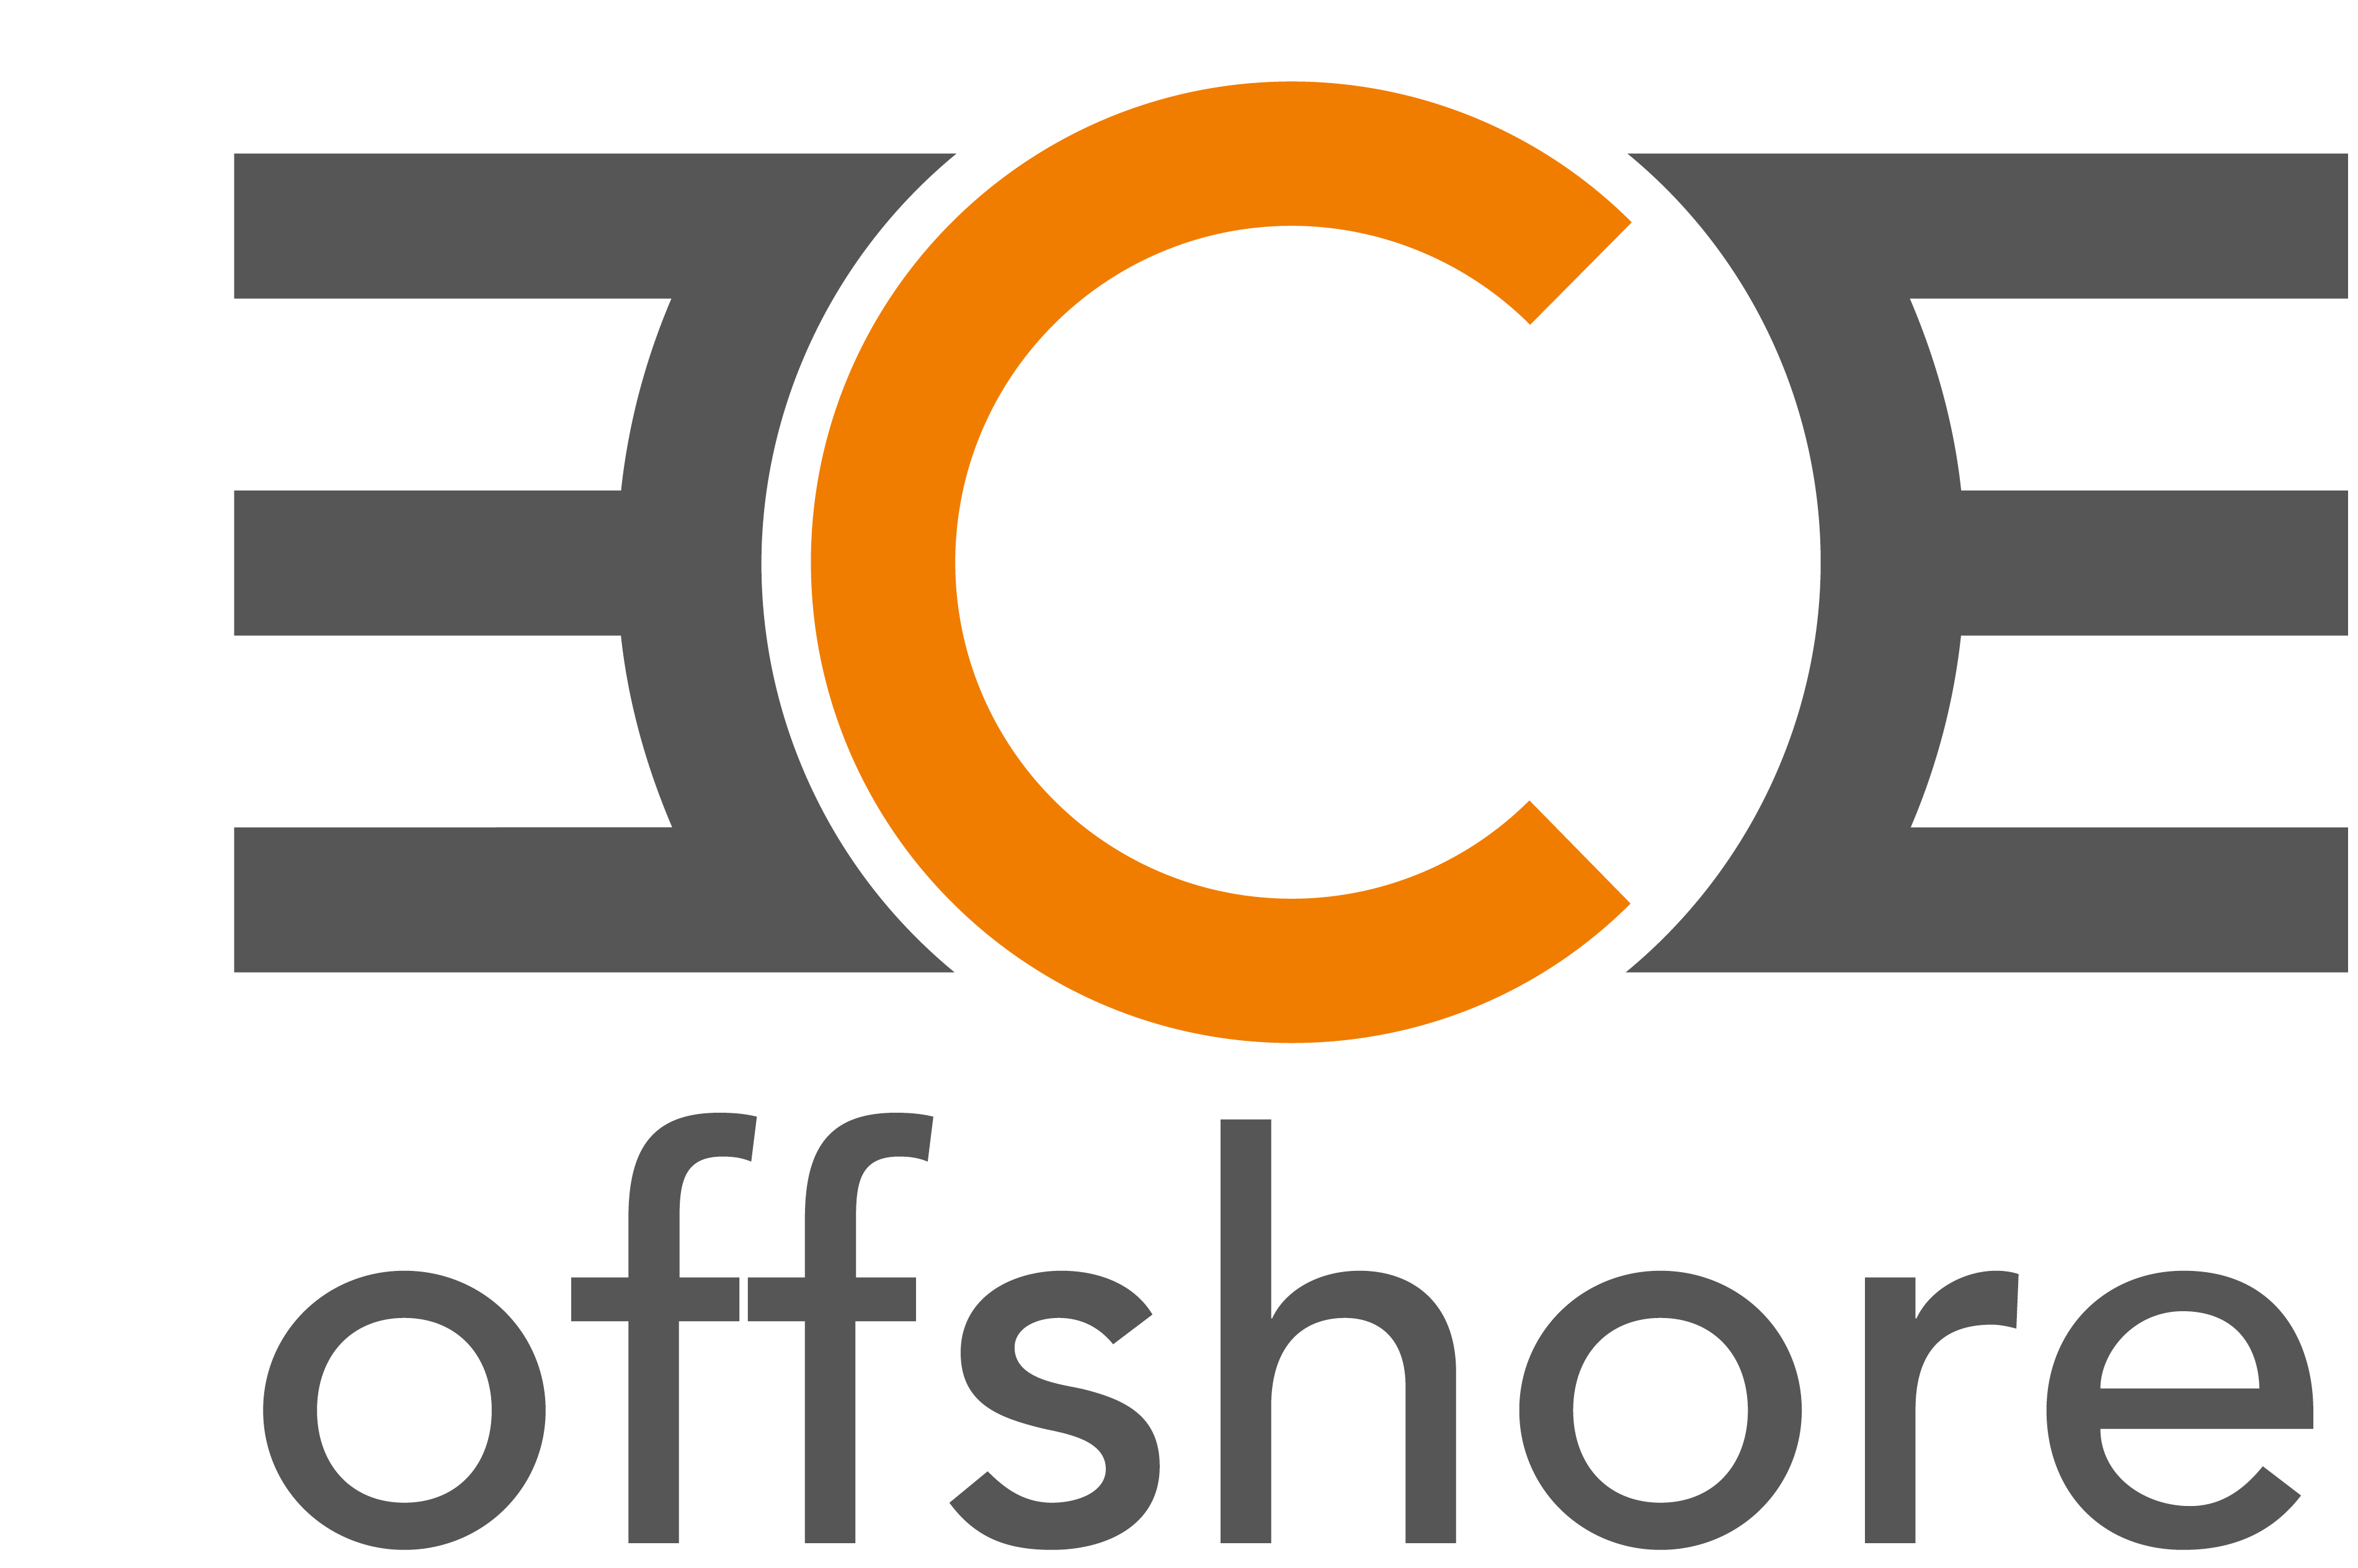 ECE Offshore